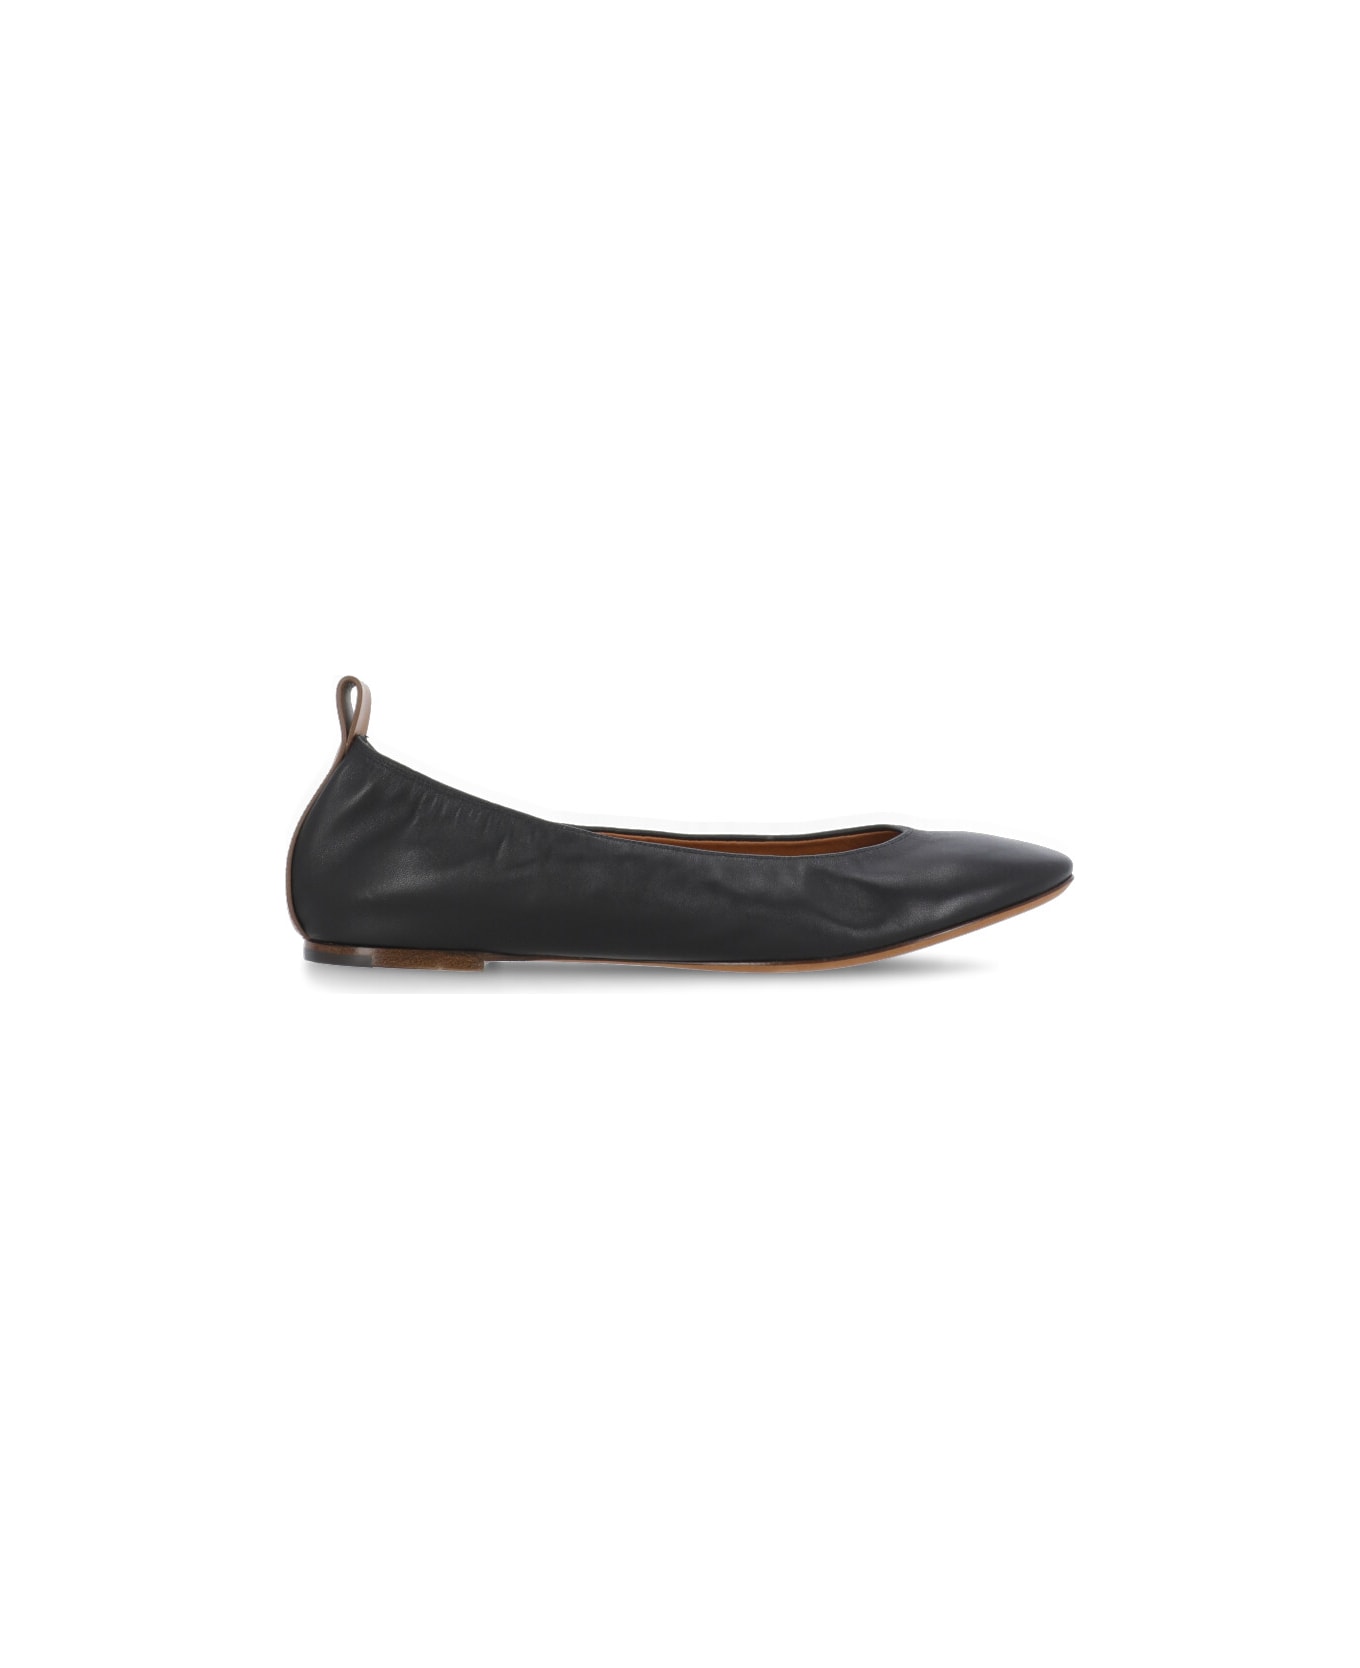 Lanvin Leather Ballet Shoes - Black フラットシューズ